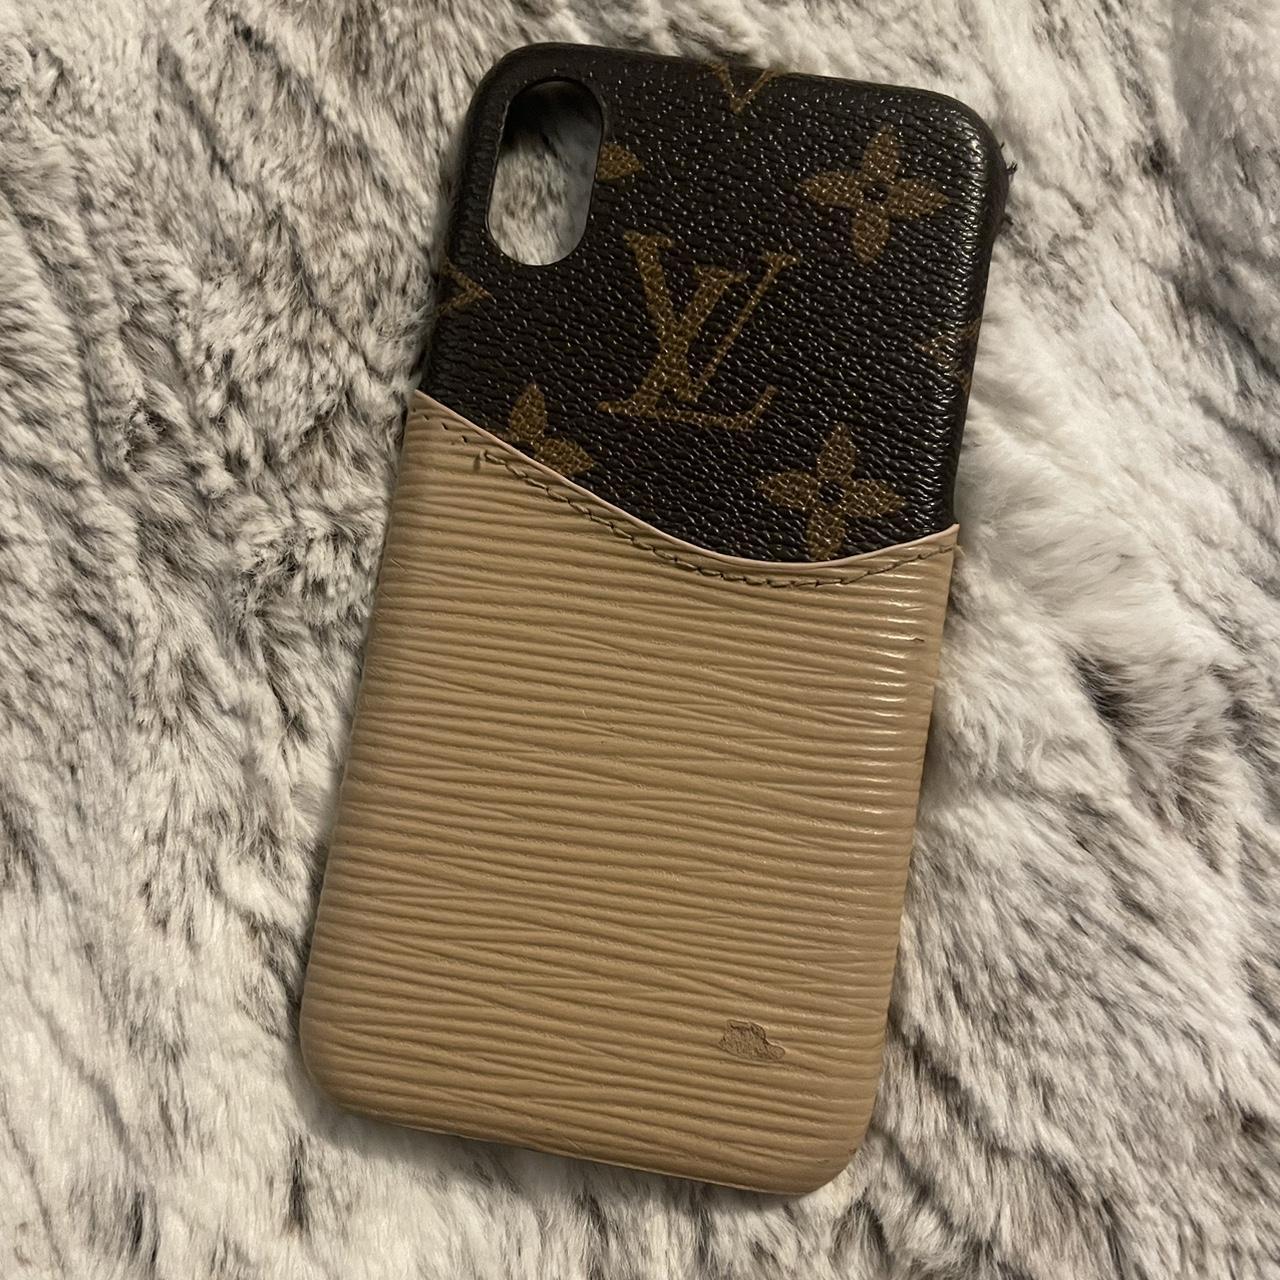 Louis Vuitton Monogram iPhone Case #louisvuitton - Depop